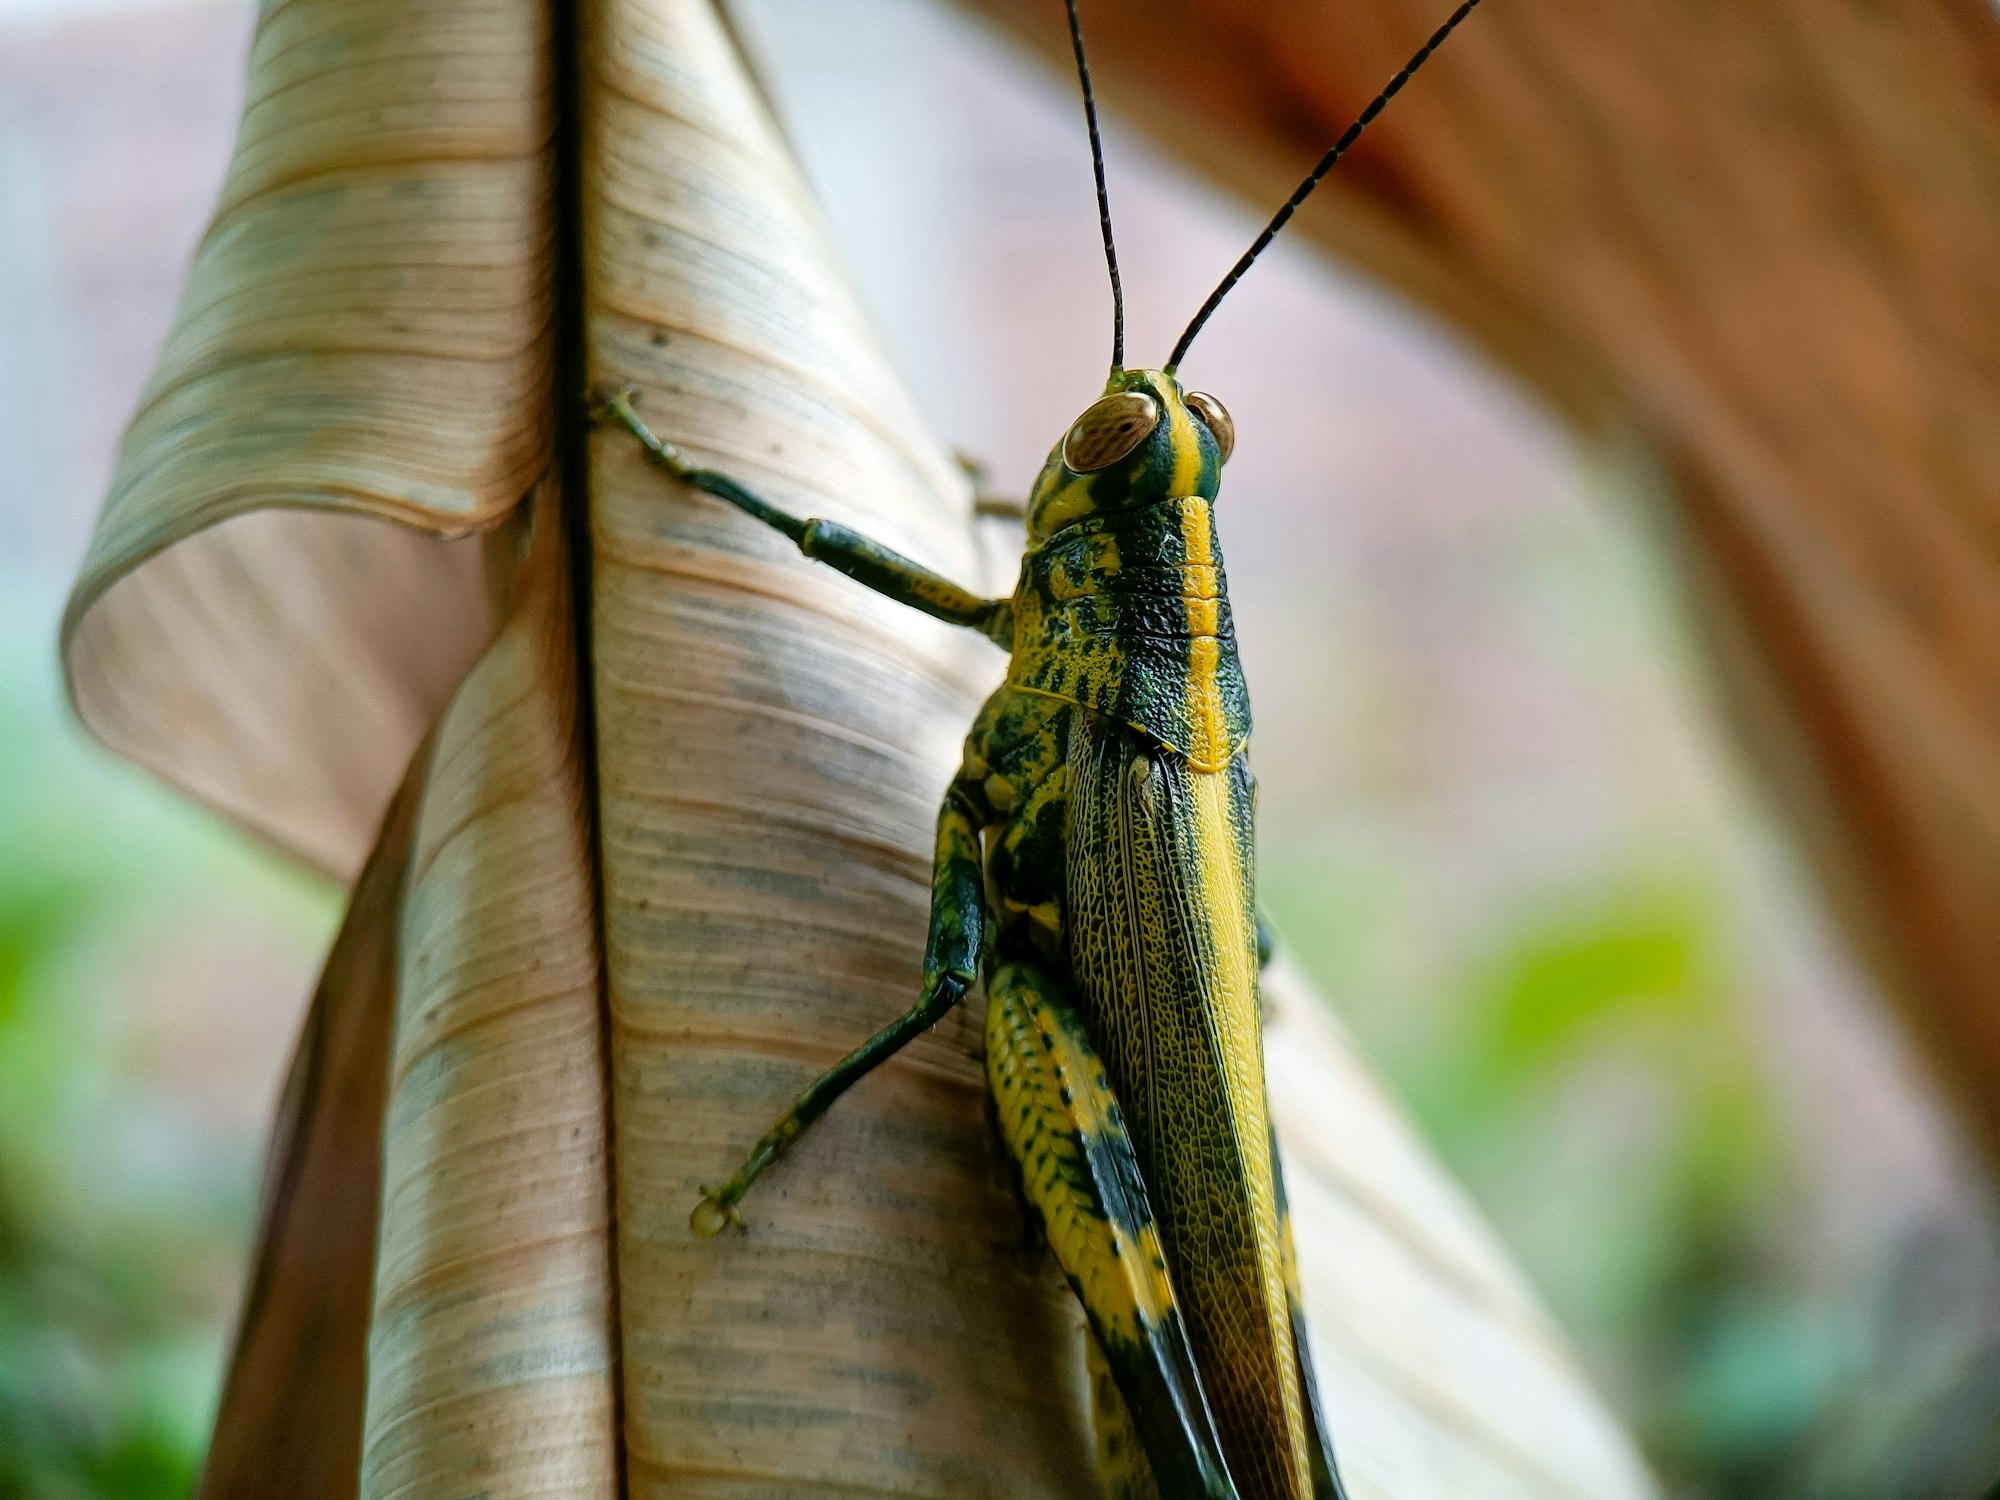 locust species found in Malaysia